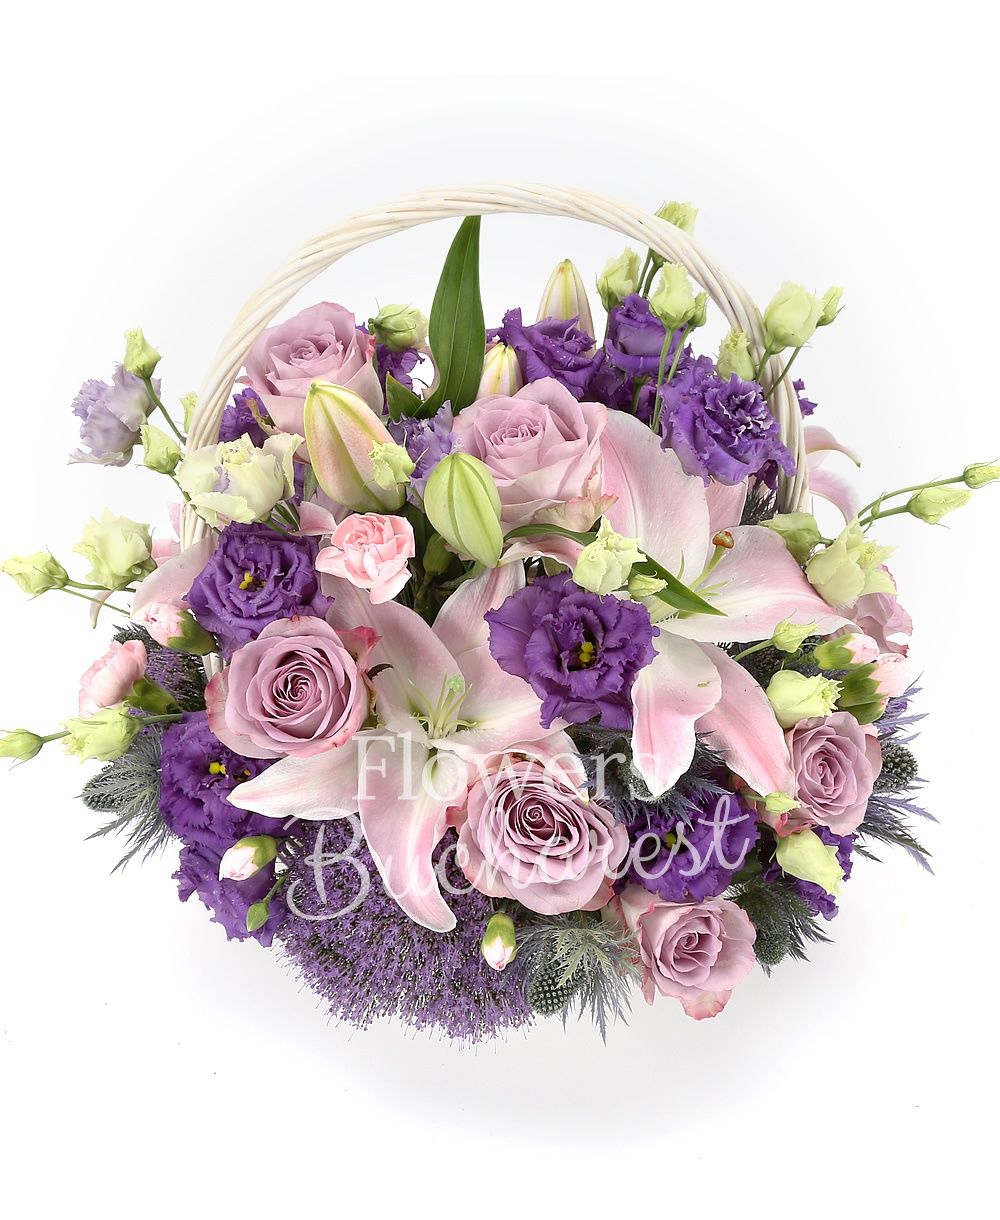 10 purple roses, 3 pink lilies, 5 purple lisianthus, 3 purple trachelium, 3 eryngium, 5 pink carnations